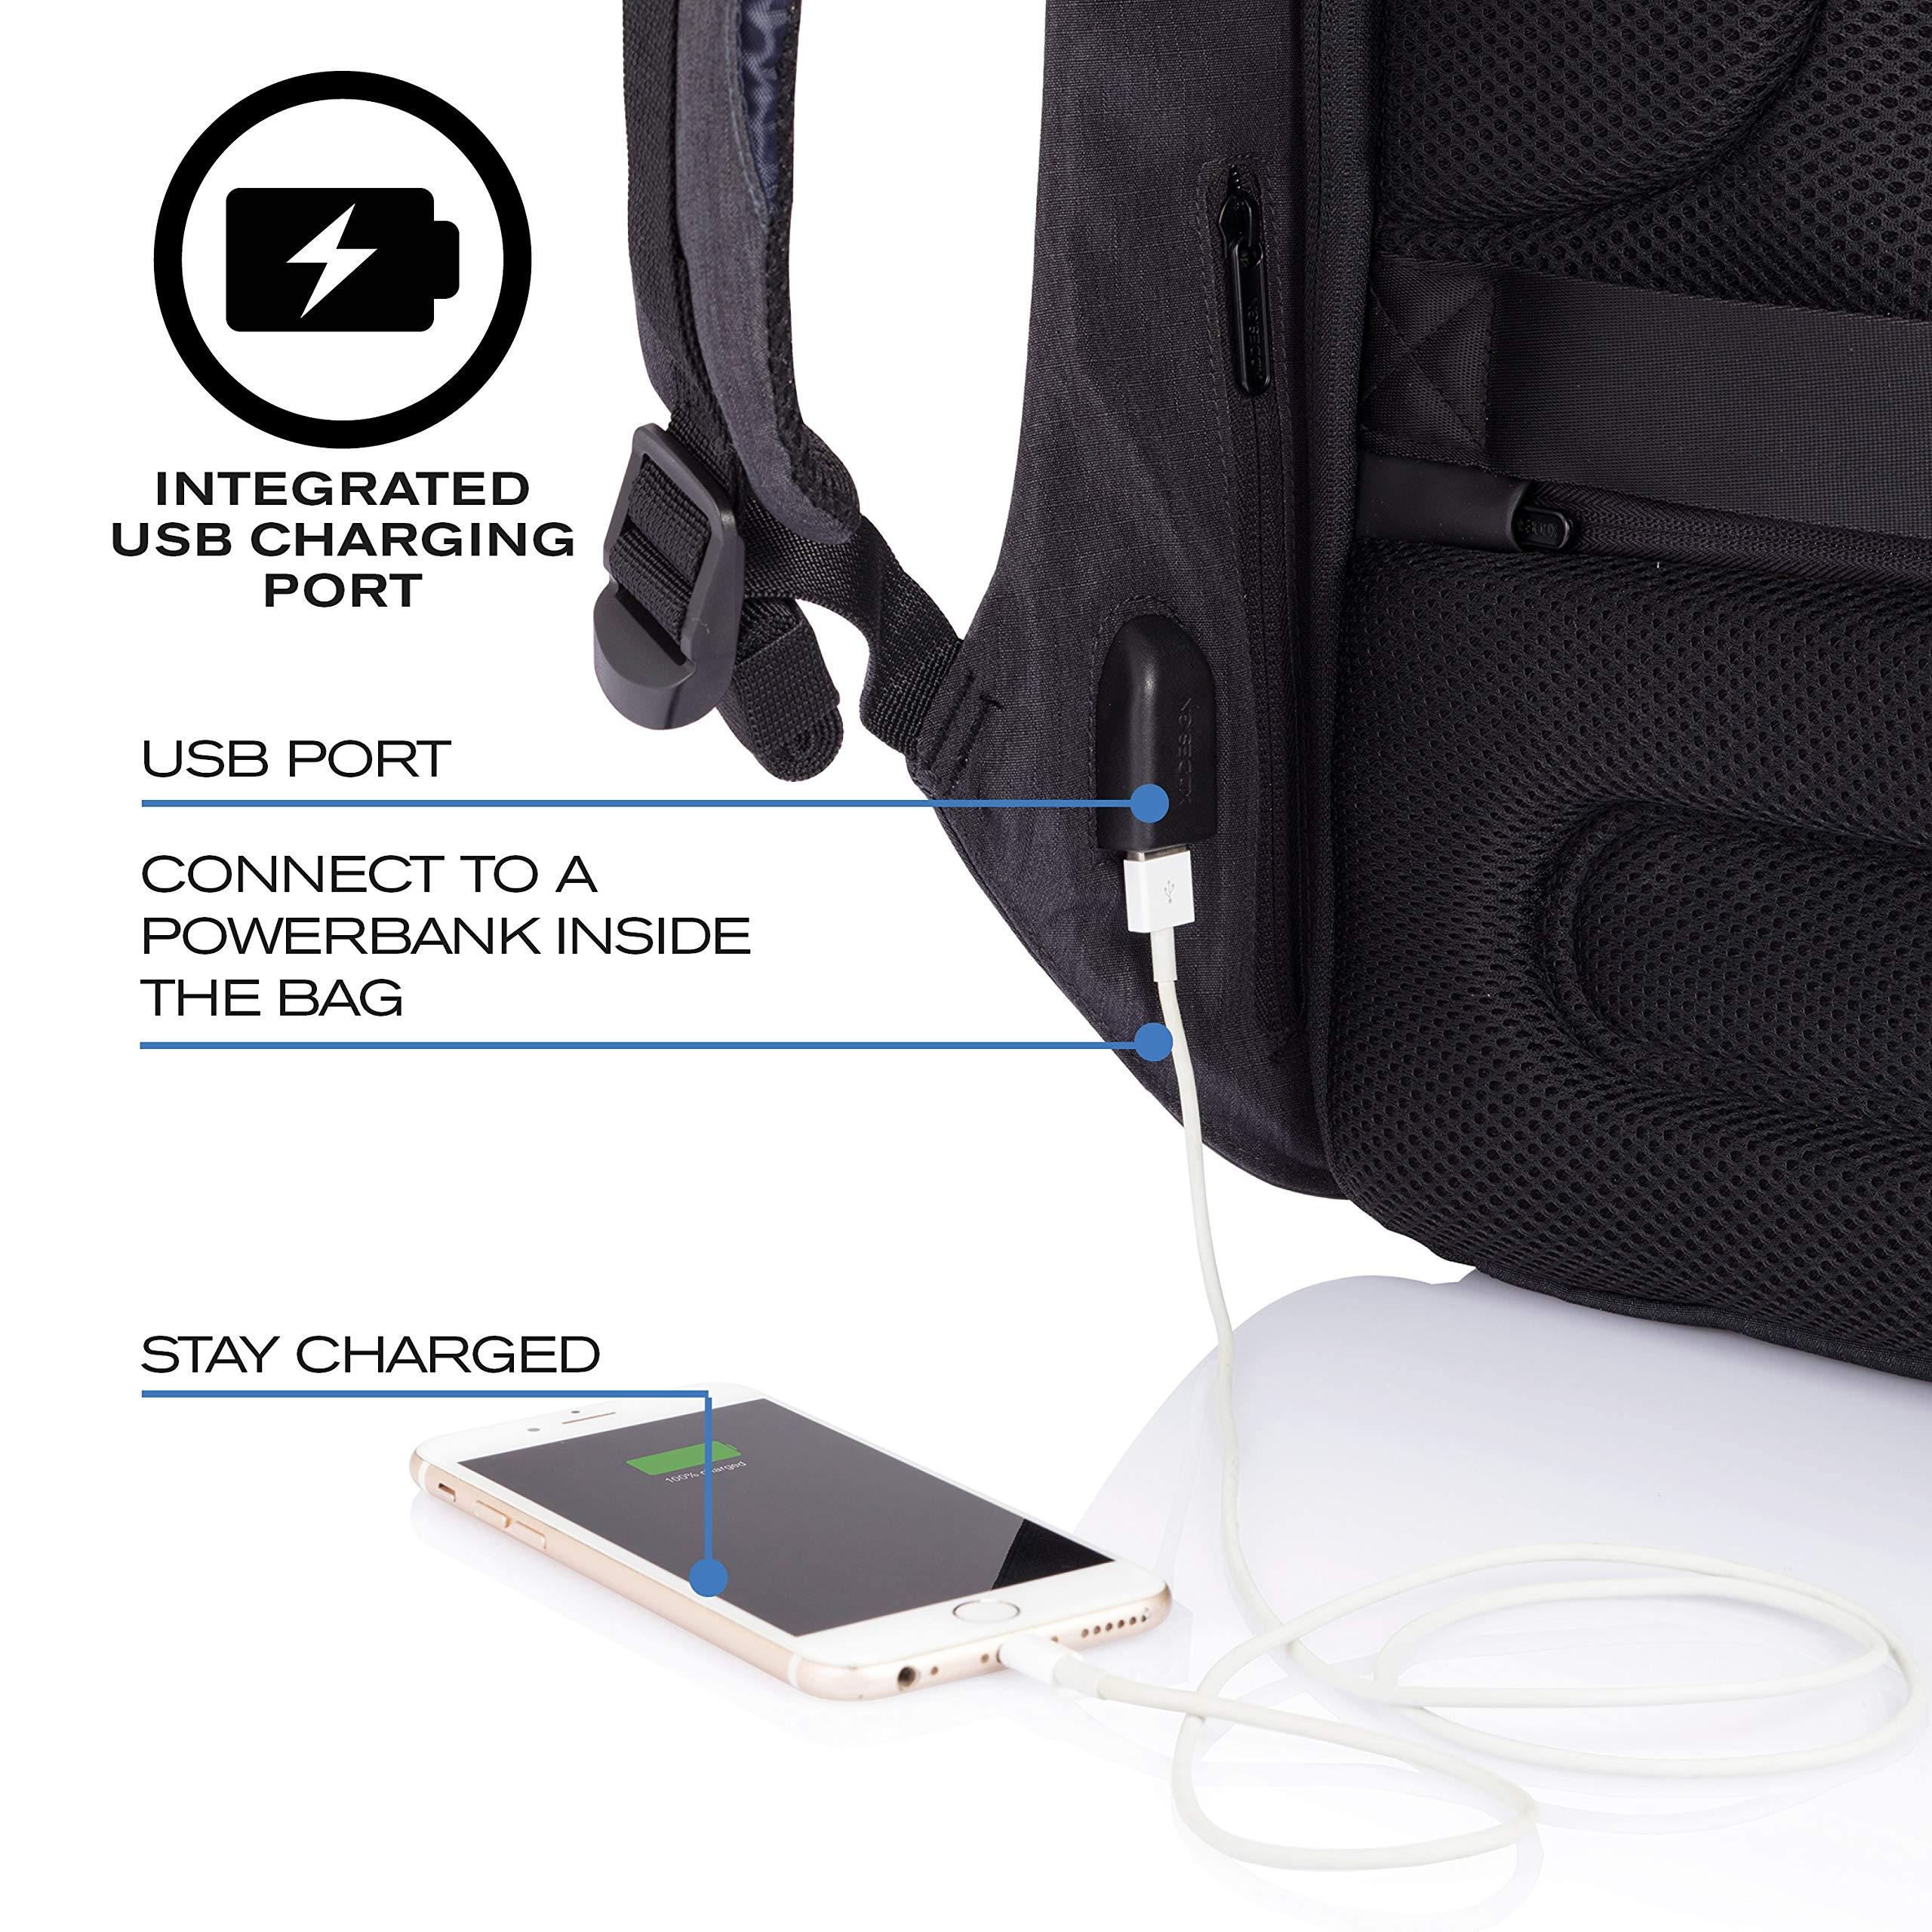 XD Design Bobby Compact Anti-Theft Laptop USB Backpack (Unisex Bag) (Navy)